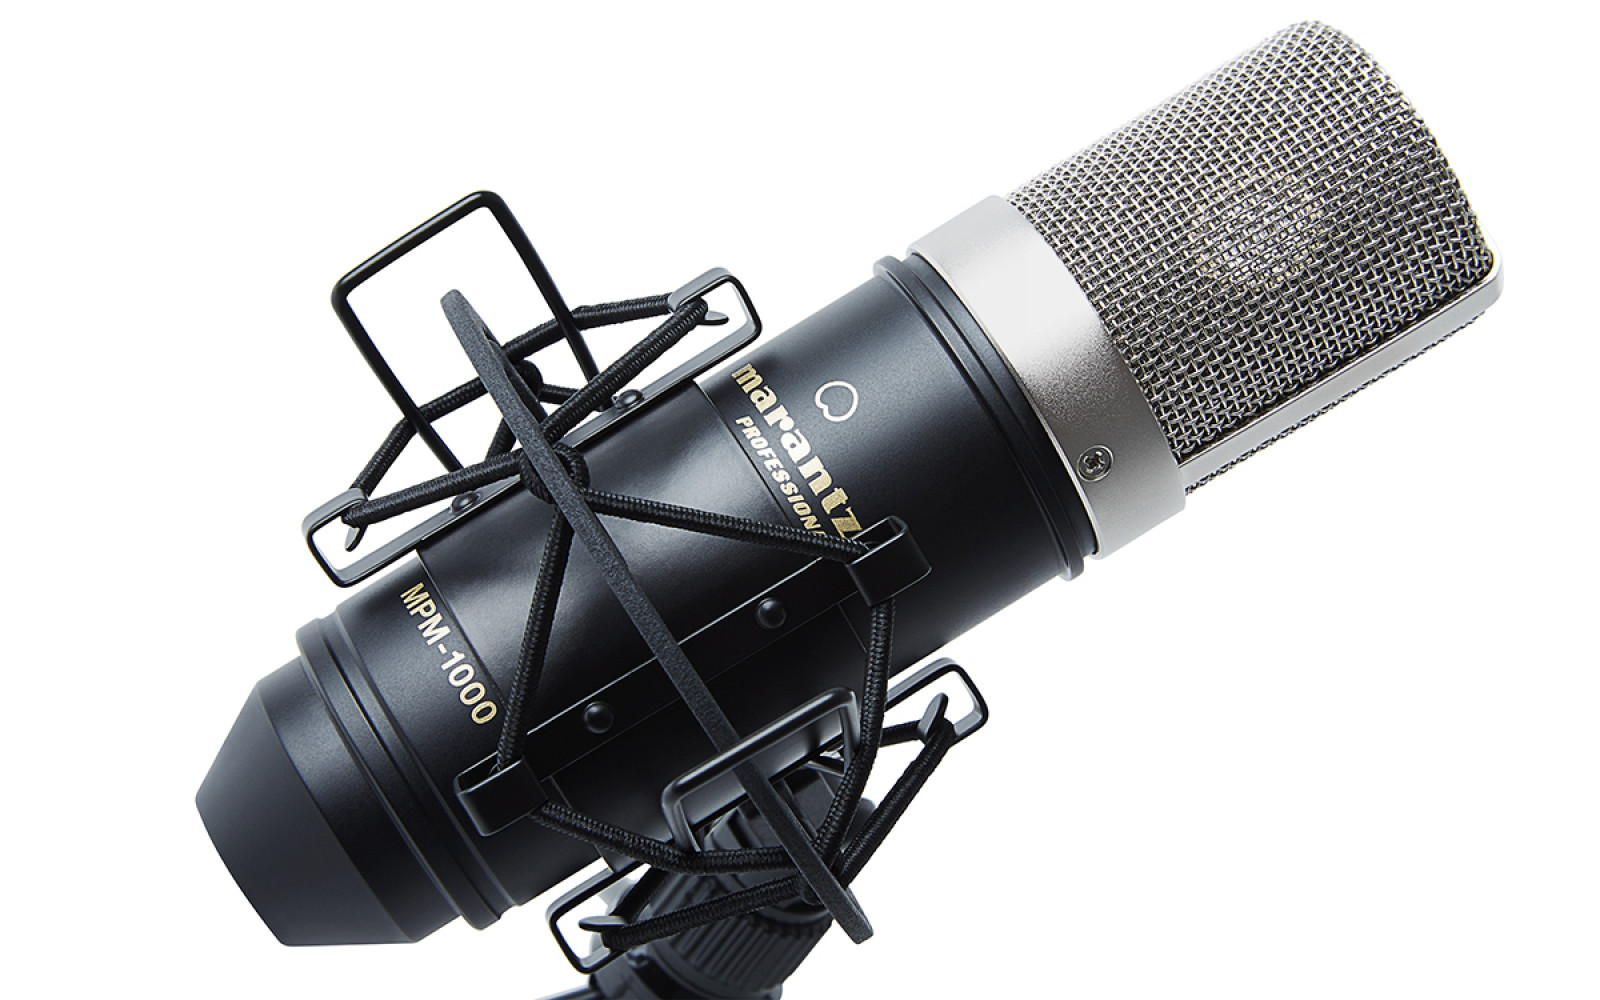 Marantz Professional MPM-1000 Large-Diaphragm Cardioid Condenser Microphone